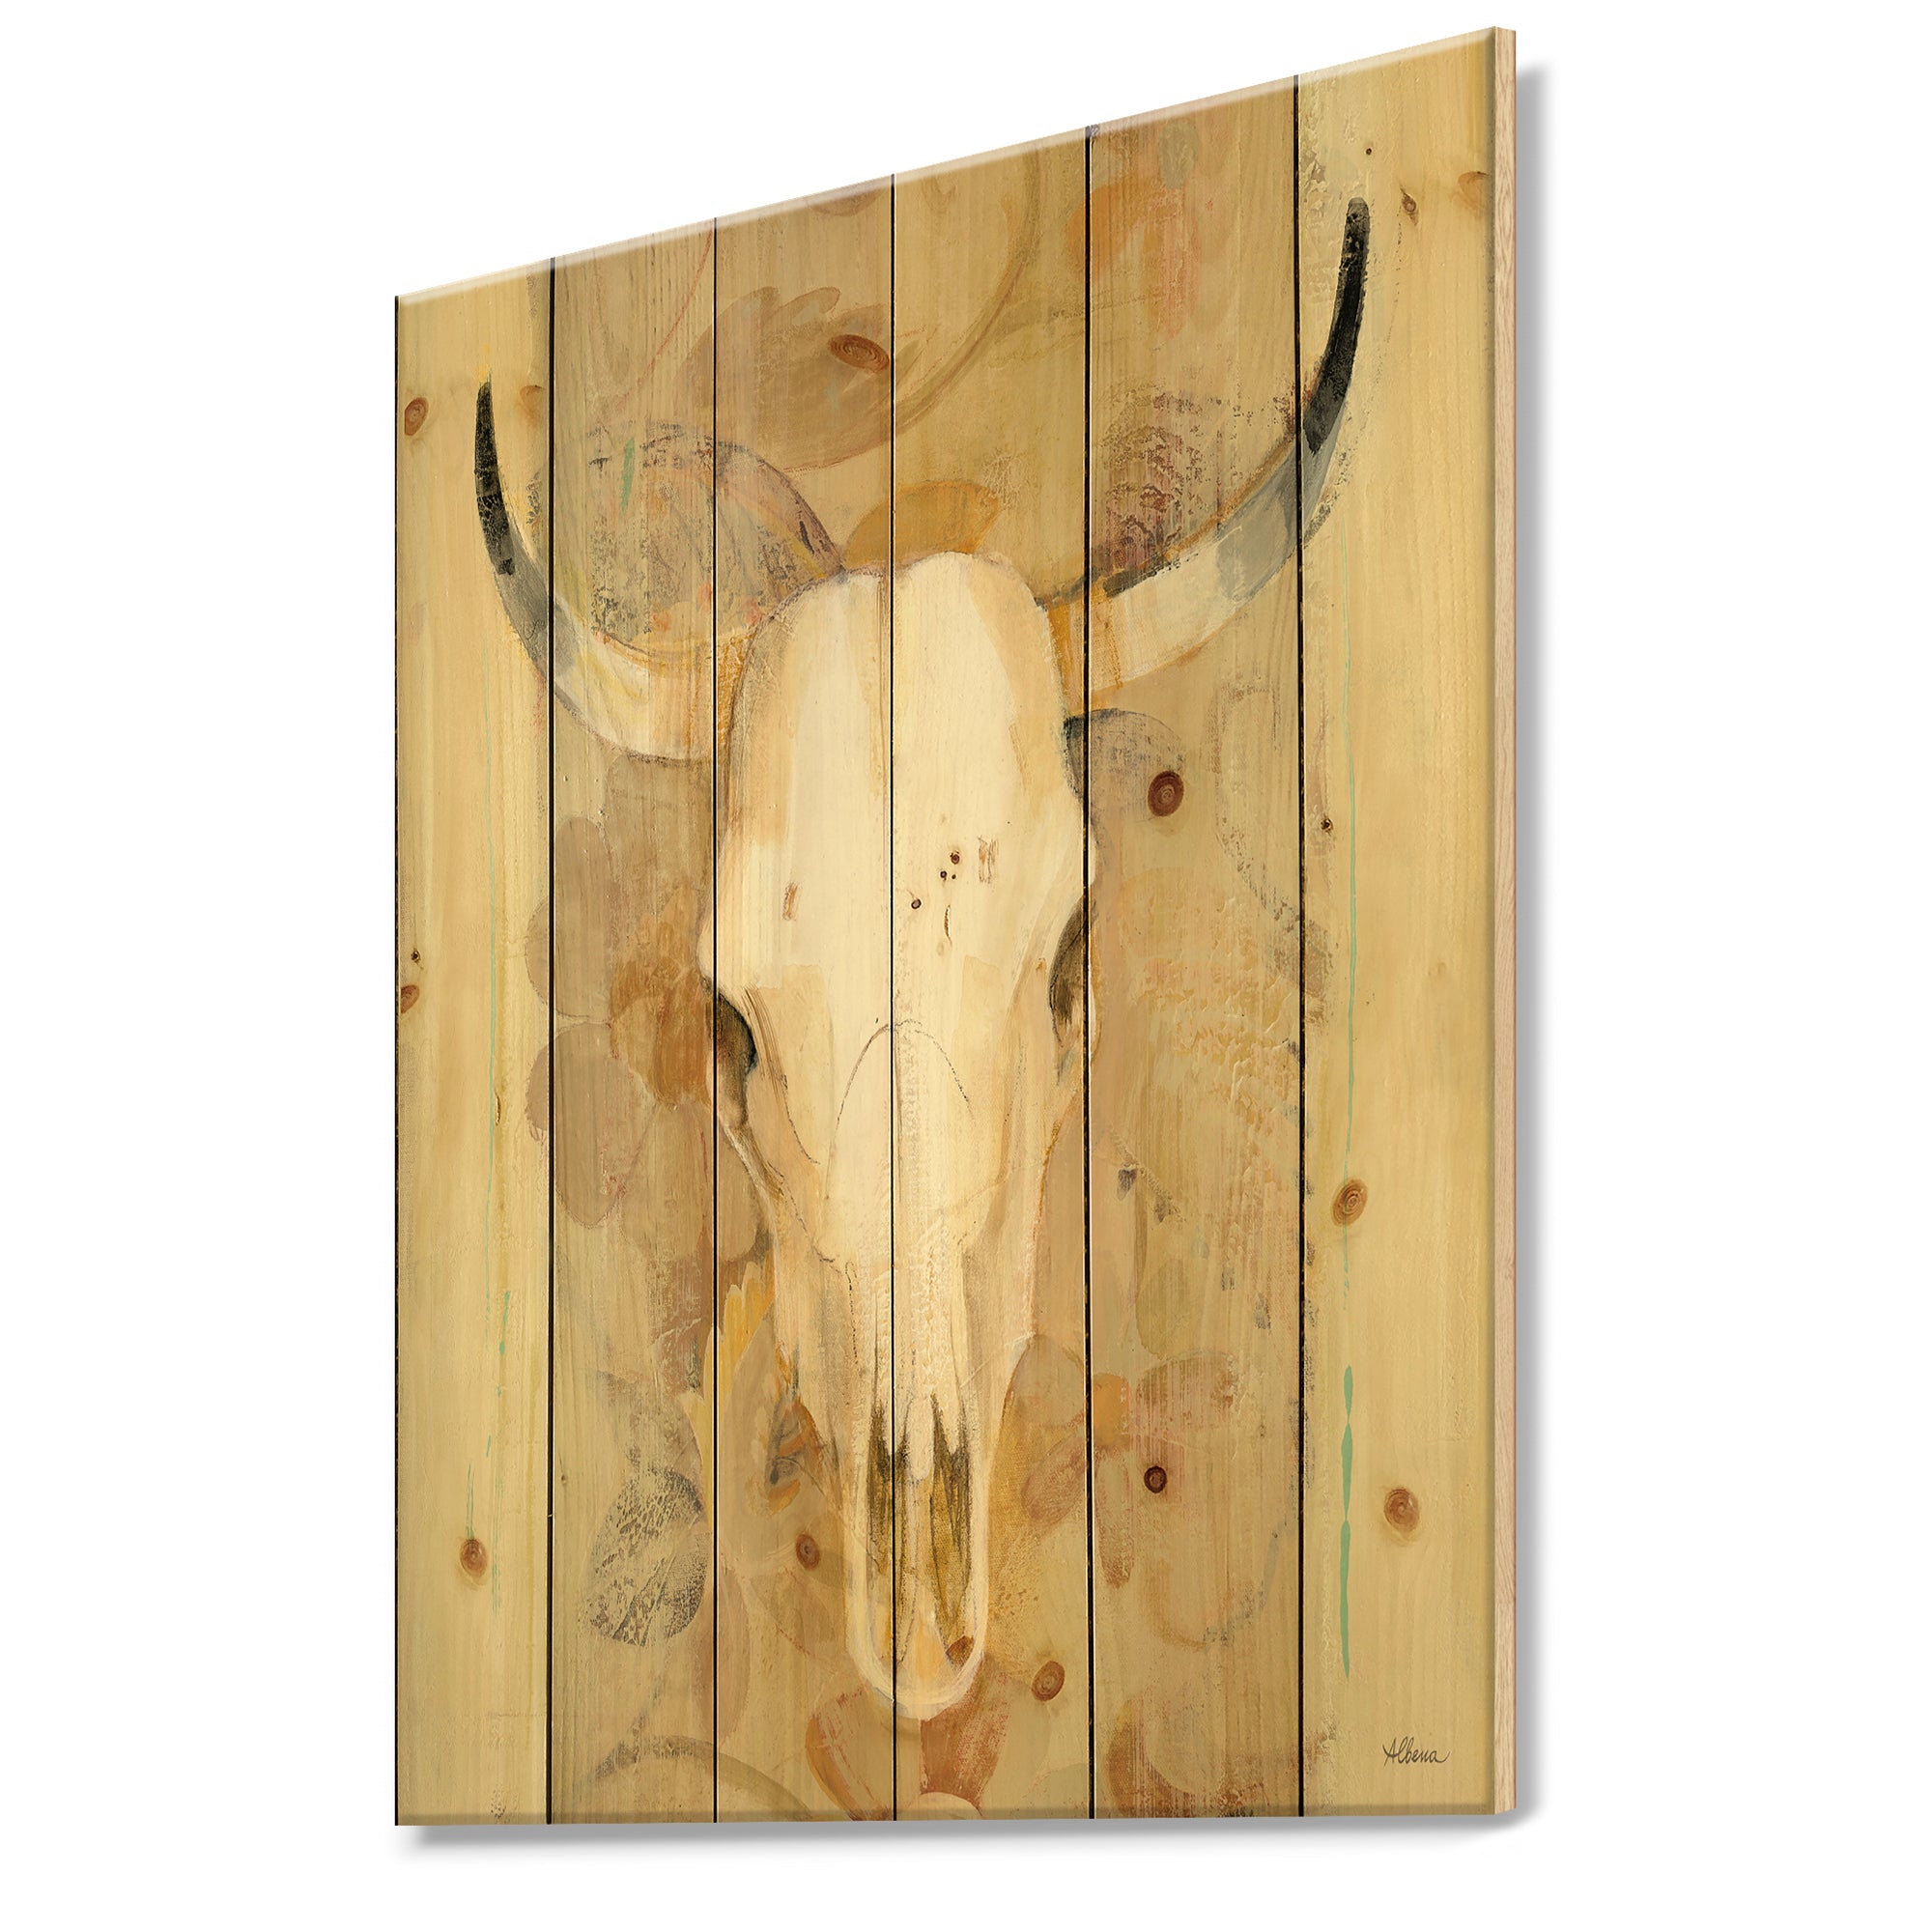 Hers southwest bones - Gold Wildlife Print on Natural Pine Wood - 15x20